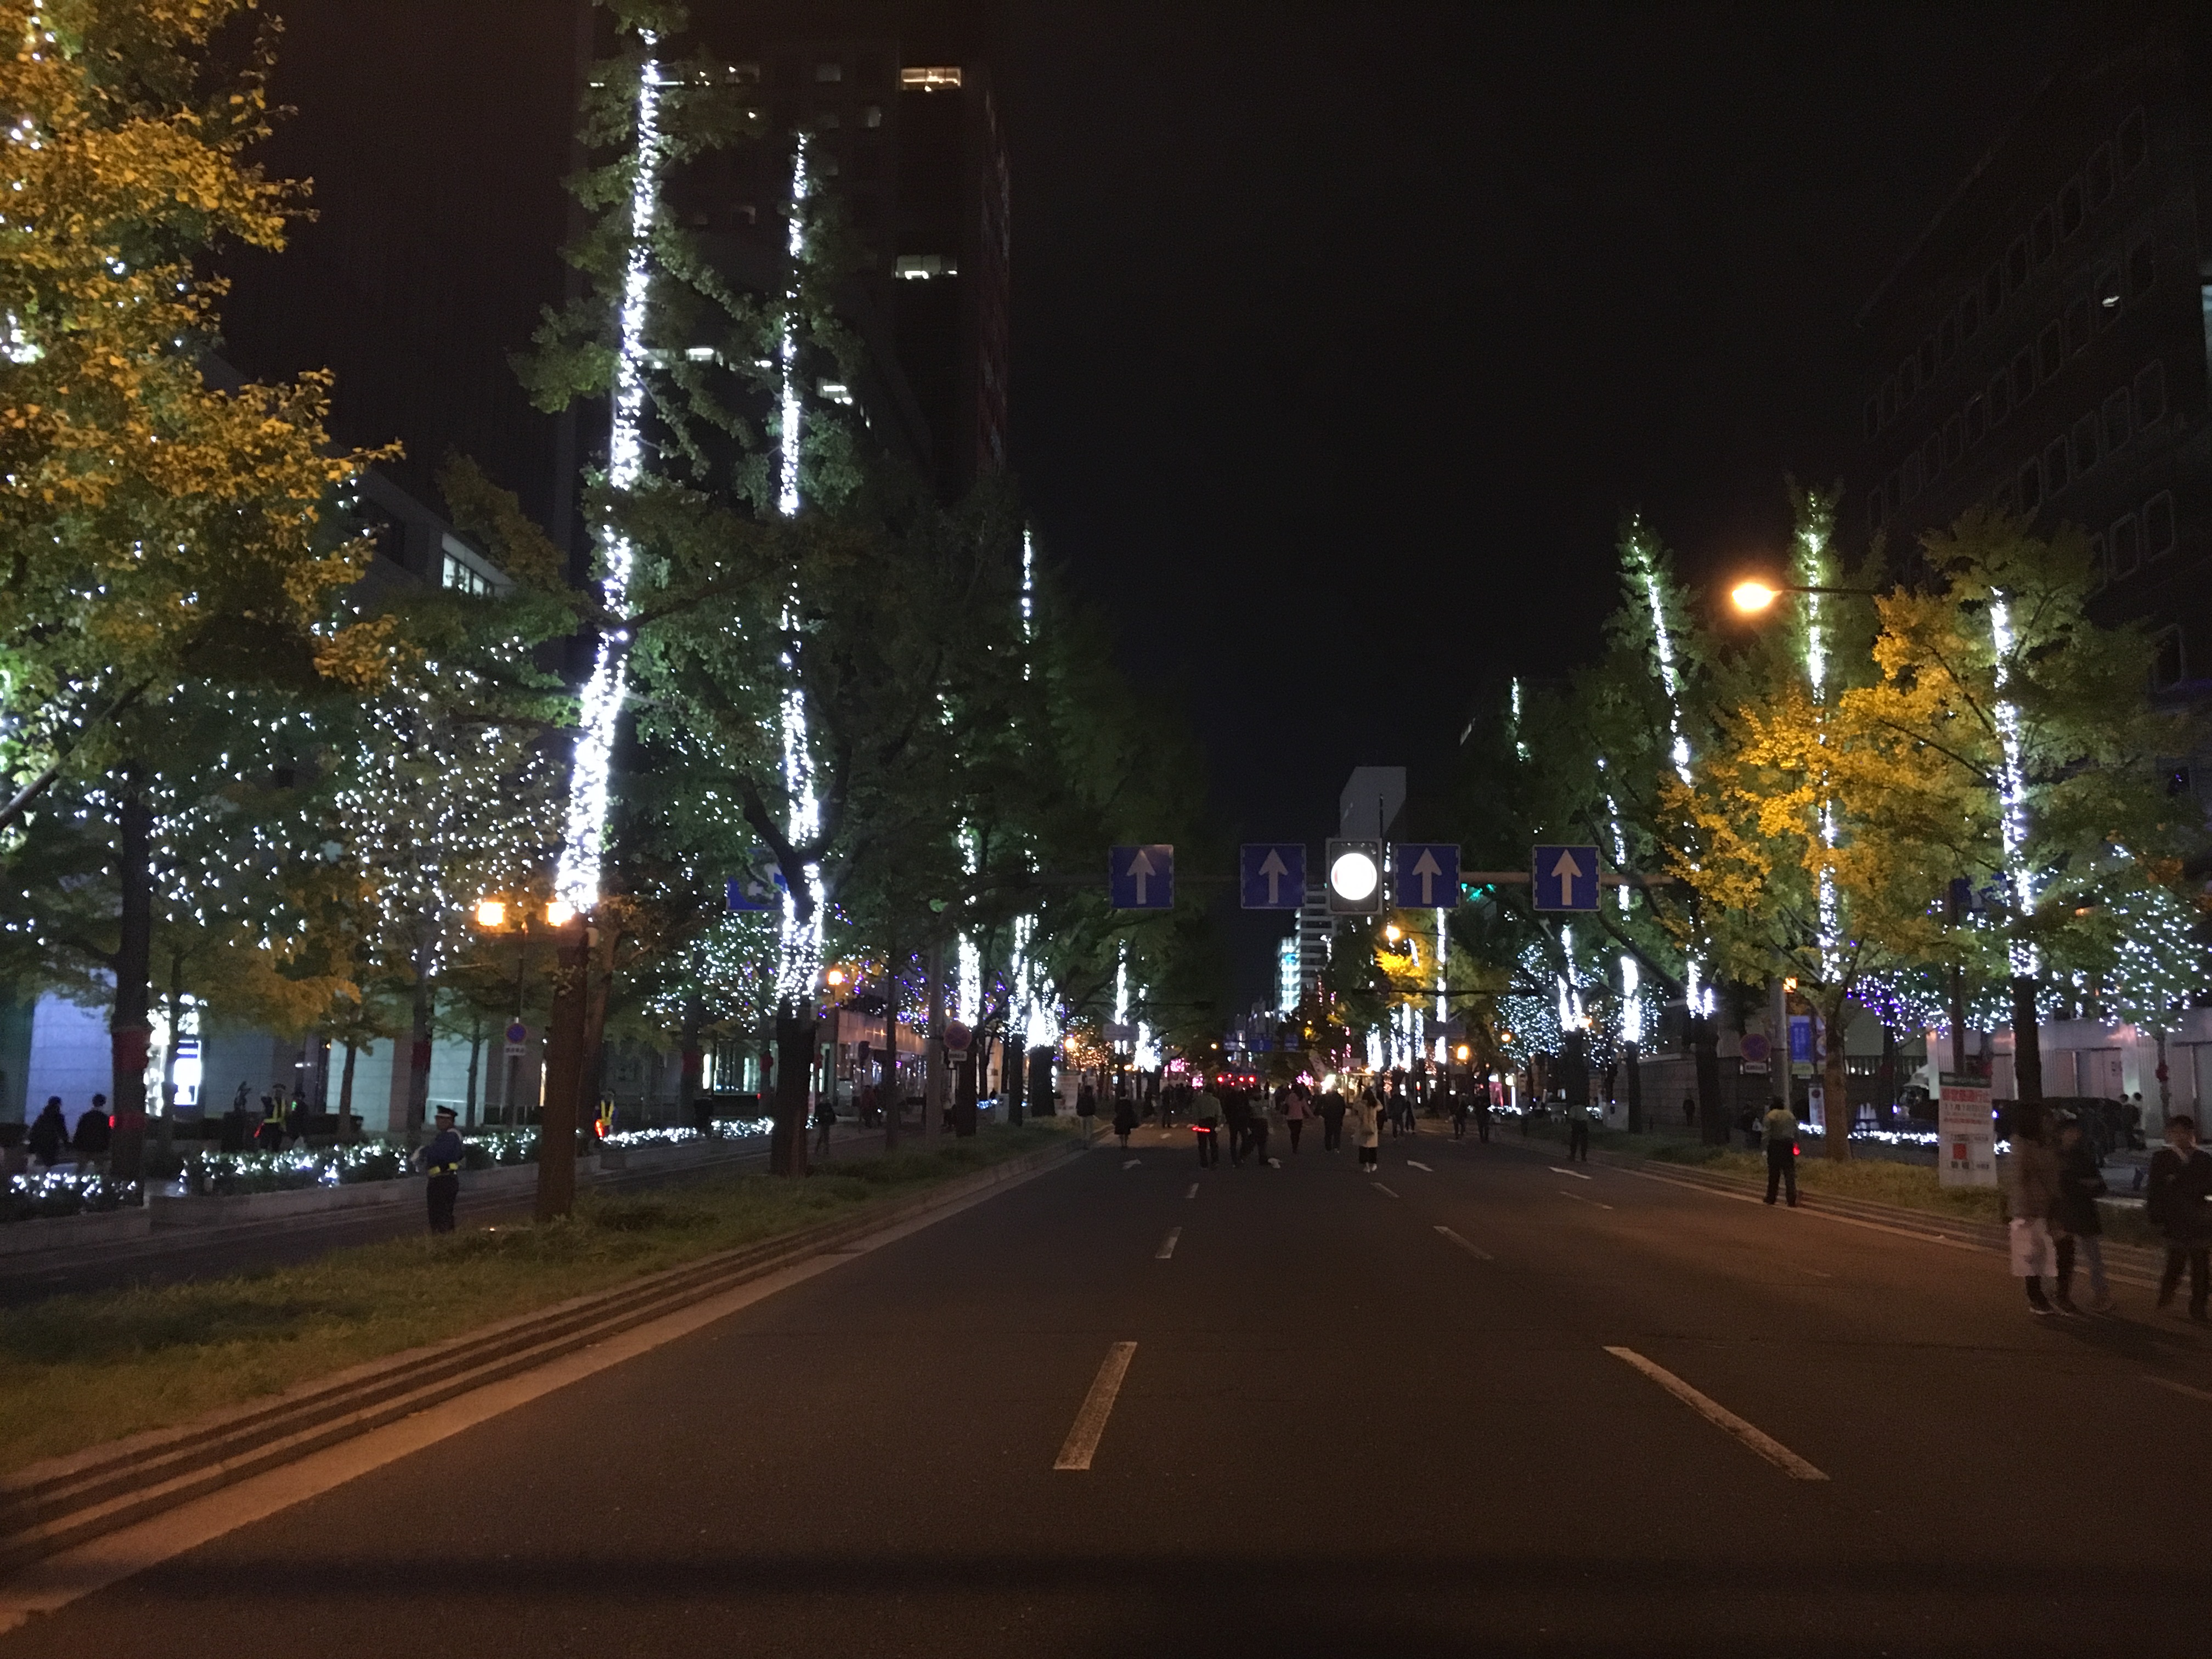 Midosuji street decorated with lights for Osaka's winter illuminations